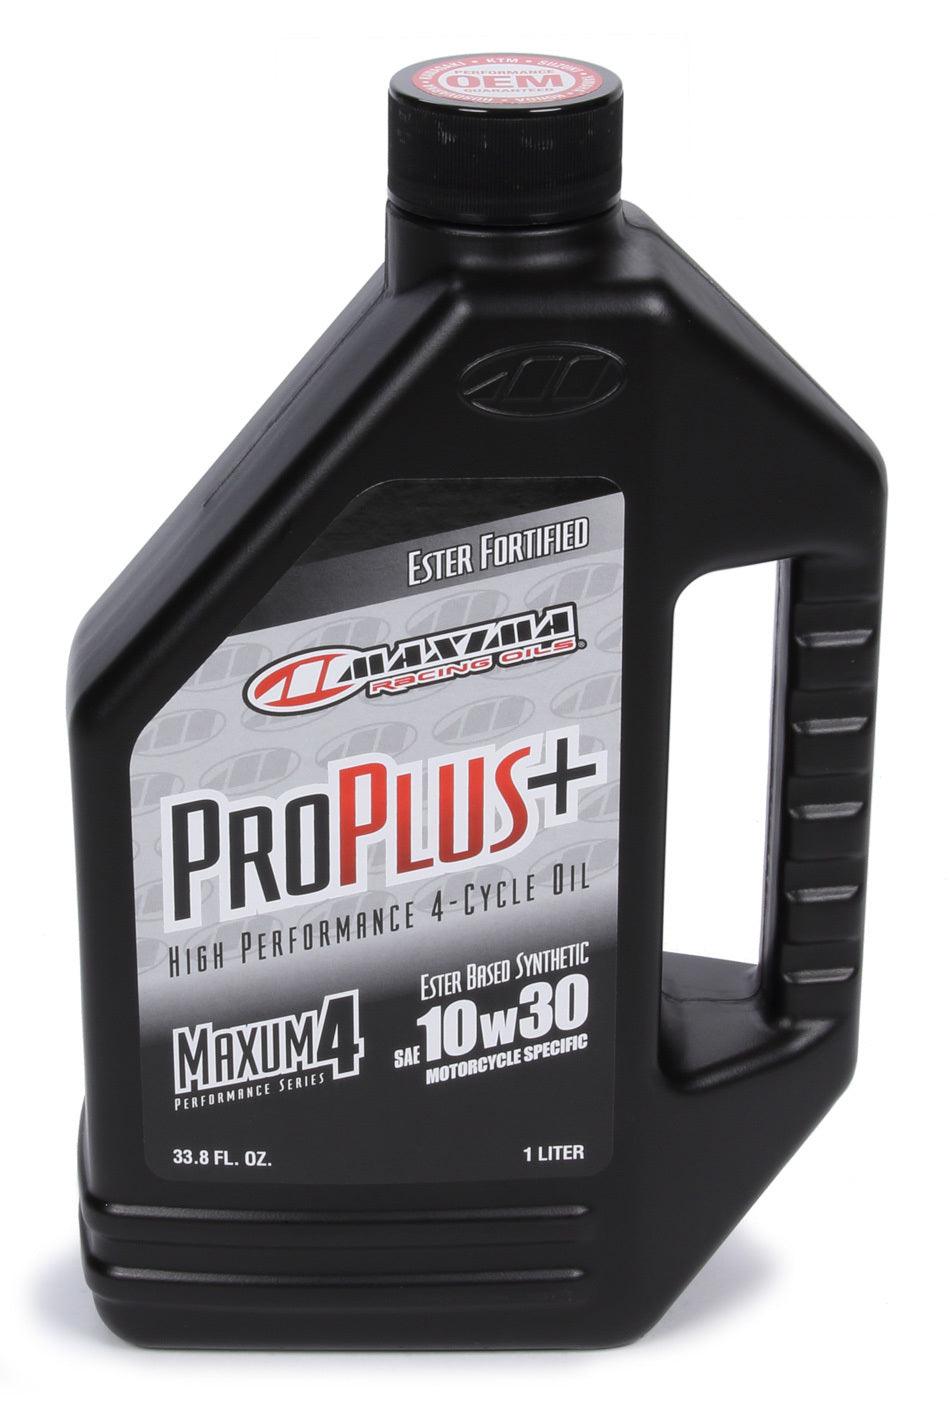 Pro Plus+ 10w30 Syntheti c 1 Liter - Burlile Performance Products